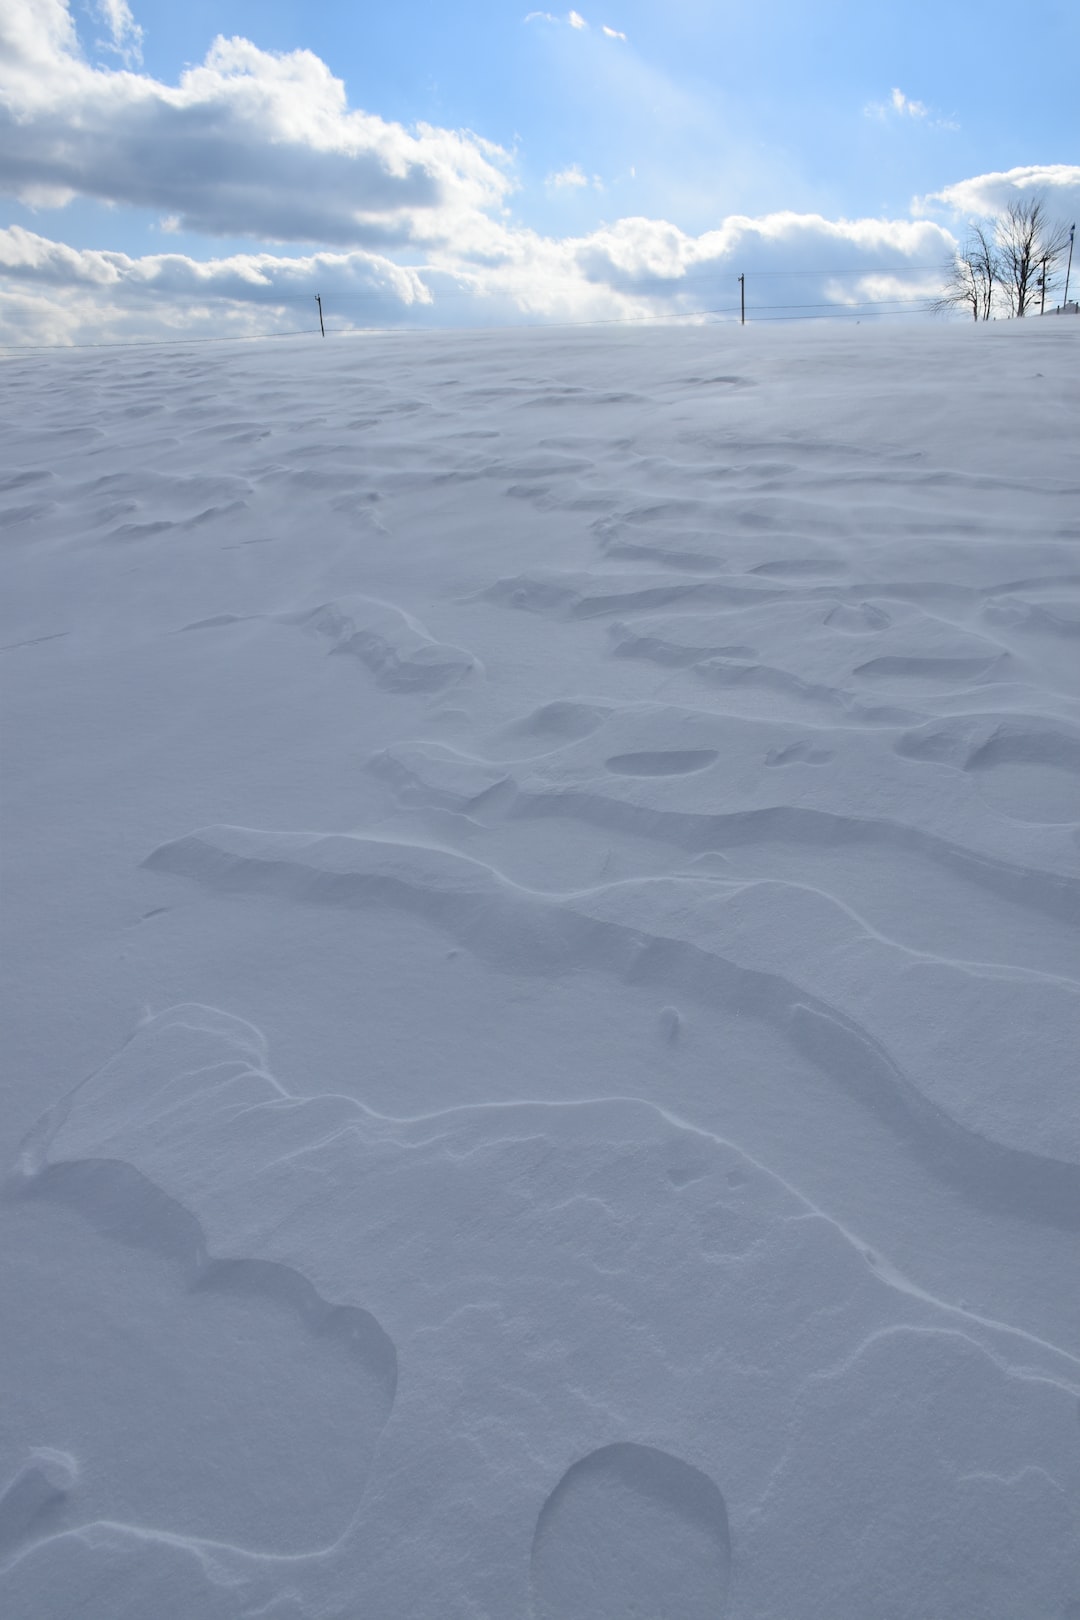 A snowy field under a cloudy sky, Sainte-Apolline, Québec, Canada